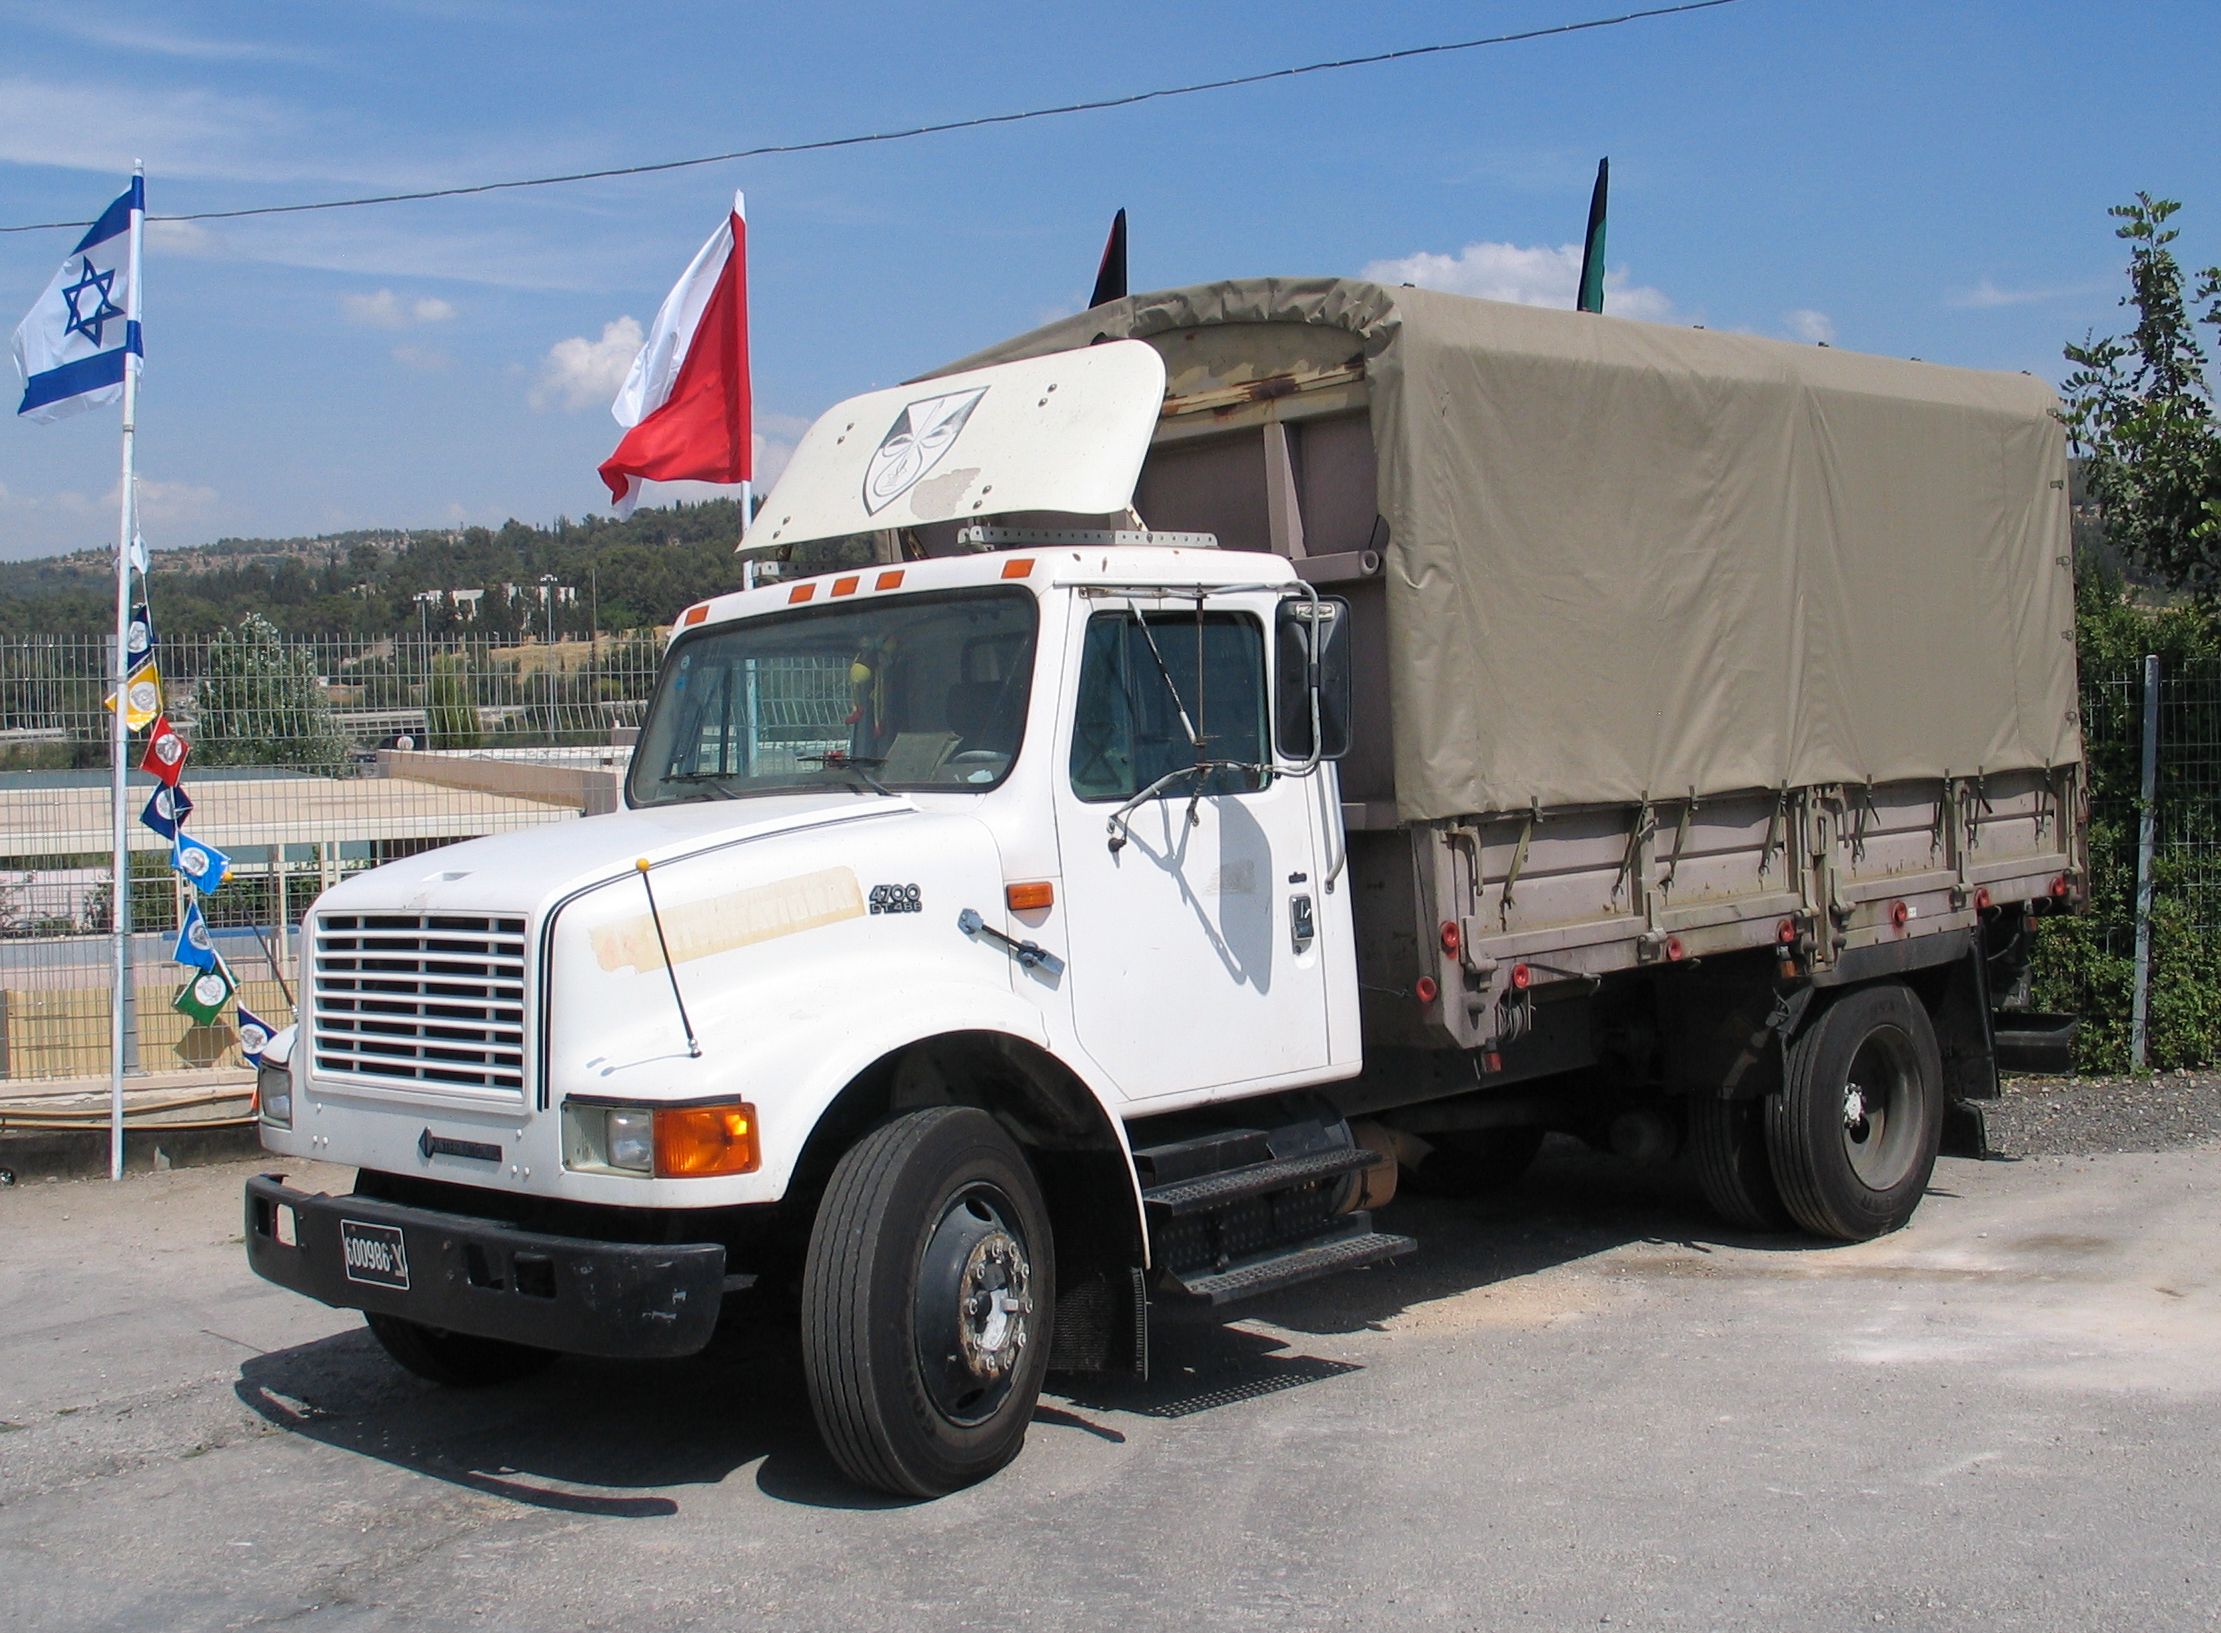 File:International-truck-id2008.jpg - Wikimedia Commons